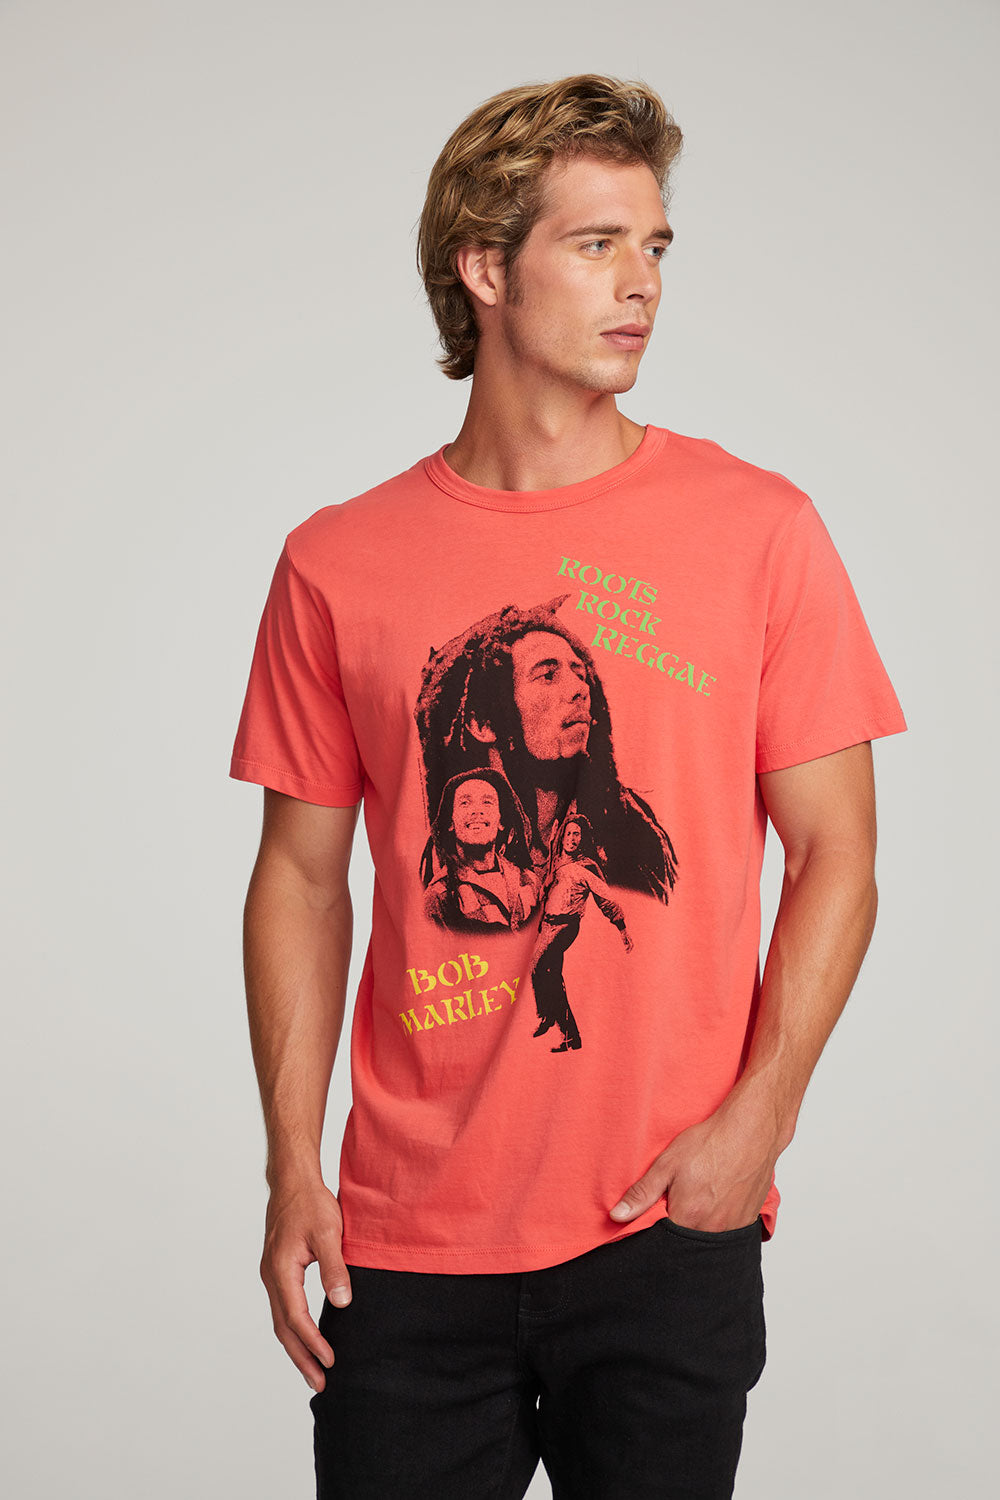 Bob Marley Roots Rock Reggae Mens Tee MENS chaserbrand